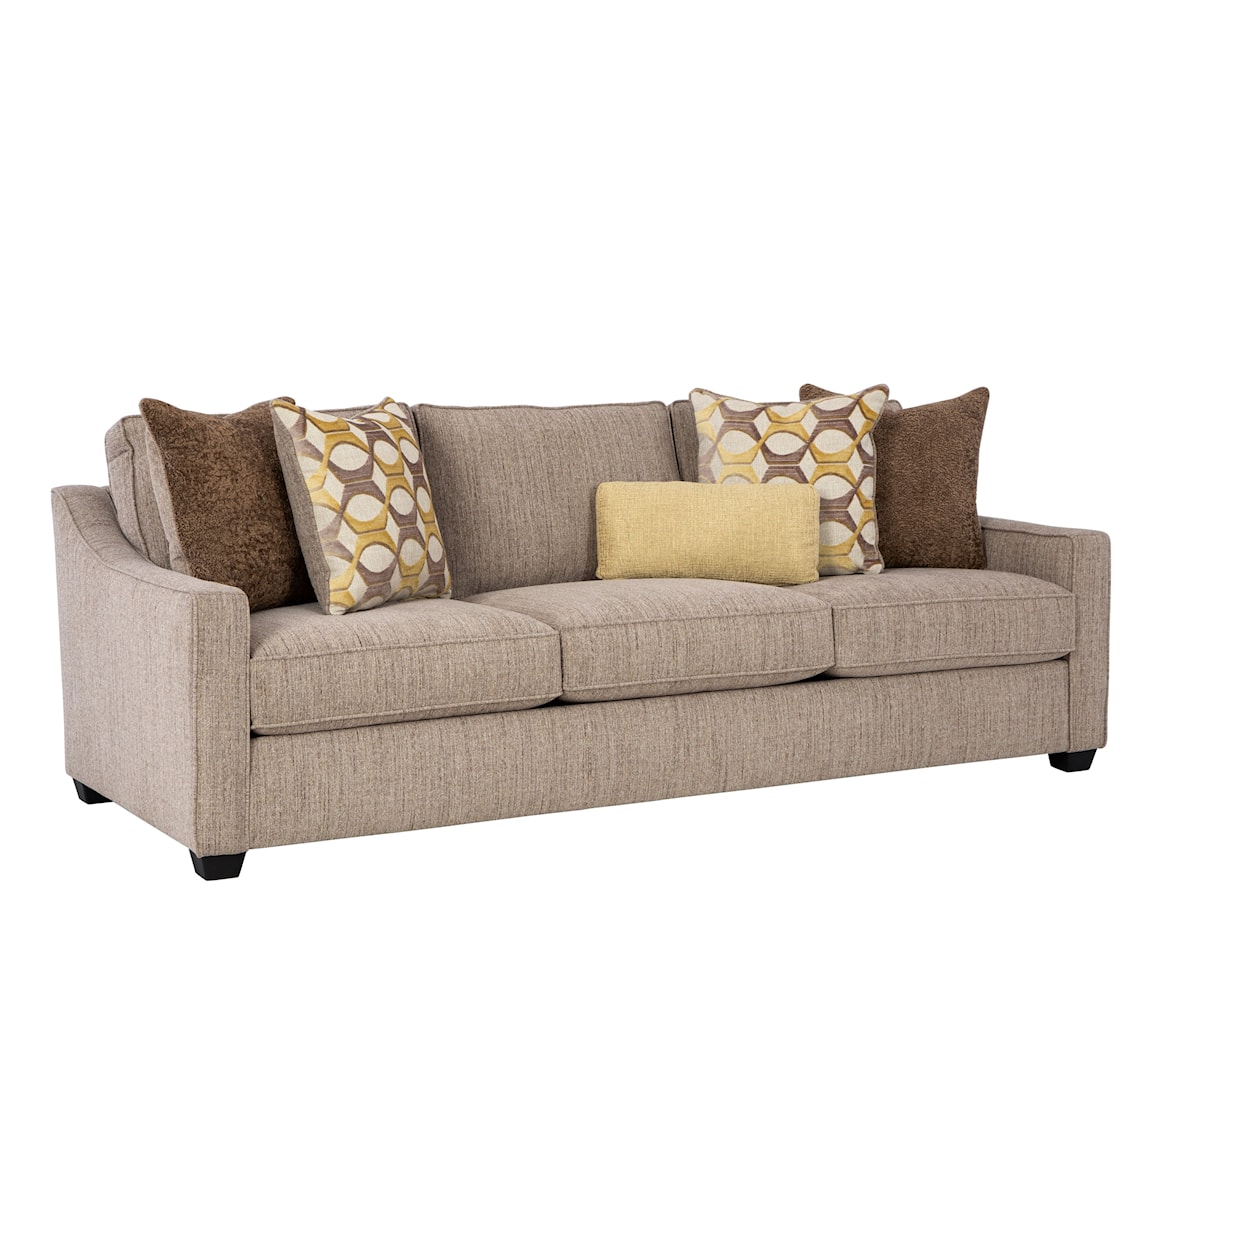 Behold Home 1125 Lenox Maple Sleeper Sofa - Queen